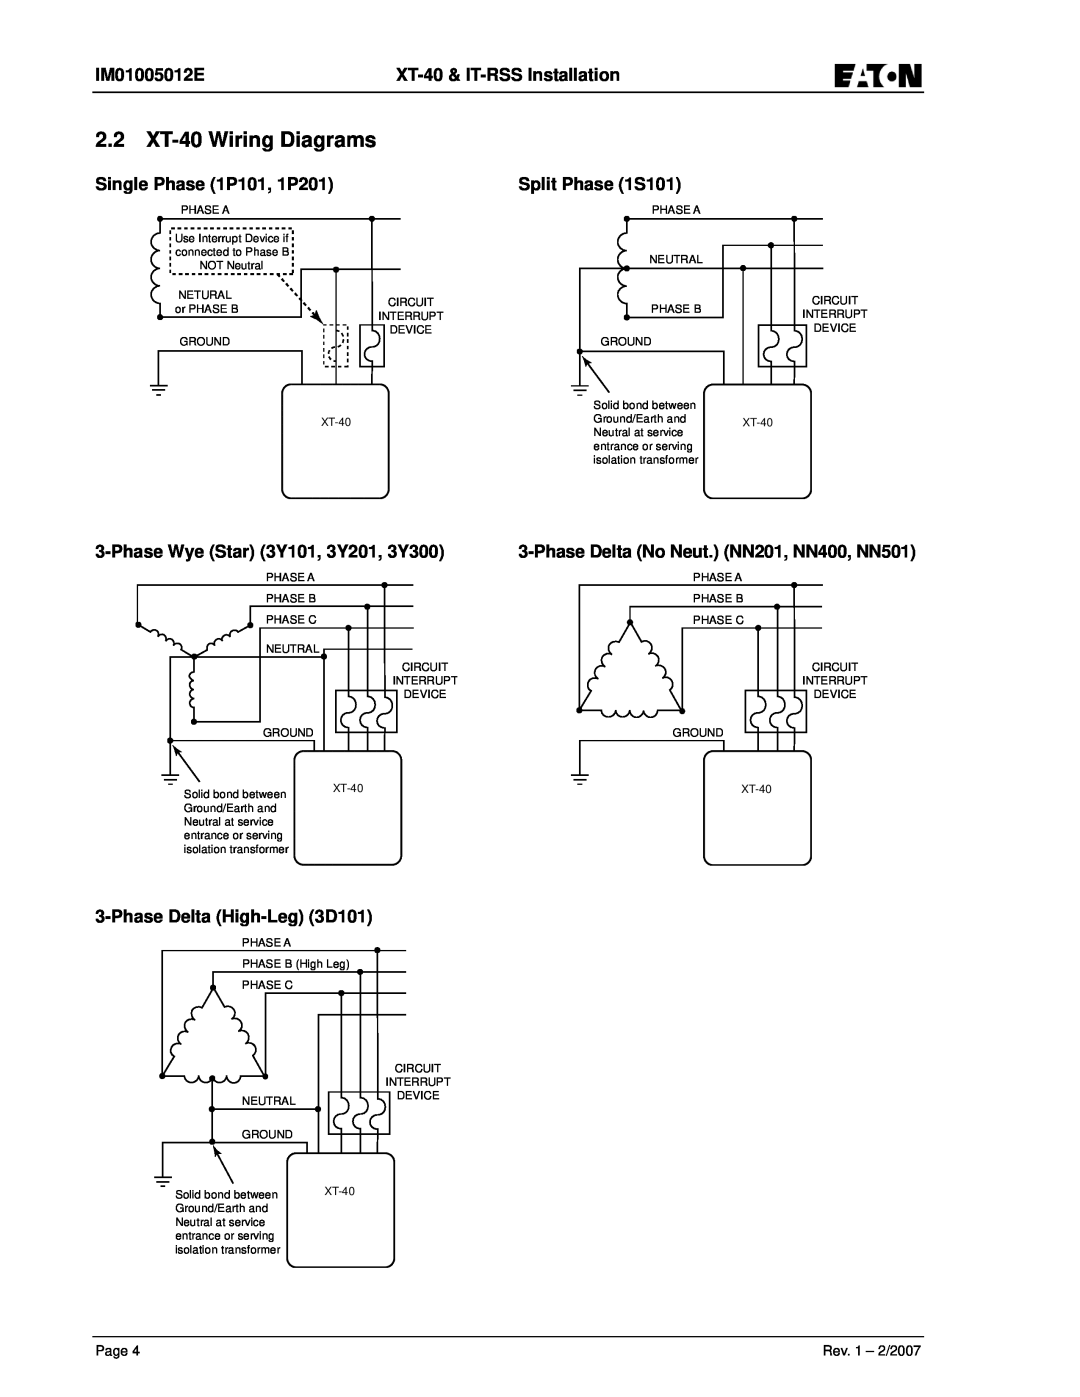 Eaton Electrical 2.2 XT-40 Wiring Diagrams, IM01005012E, XT-40 & IT-RSS Installation, Single Phase 1P101, 1P201 